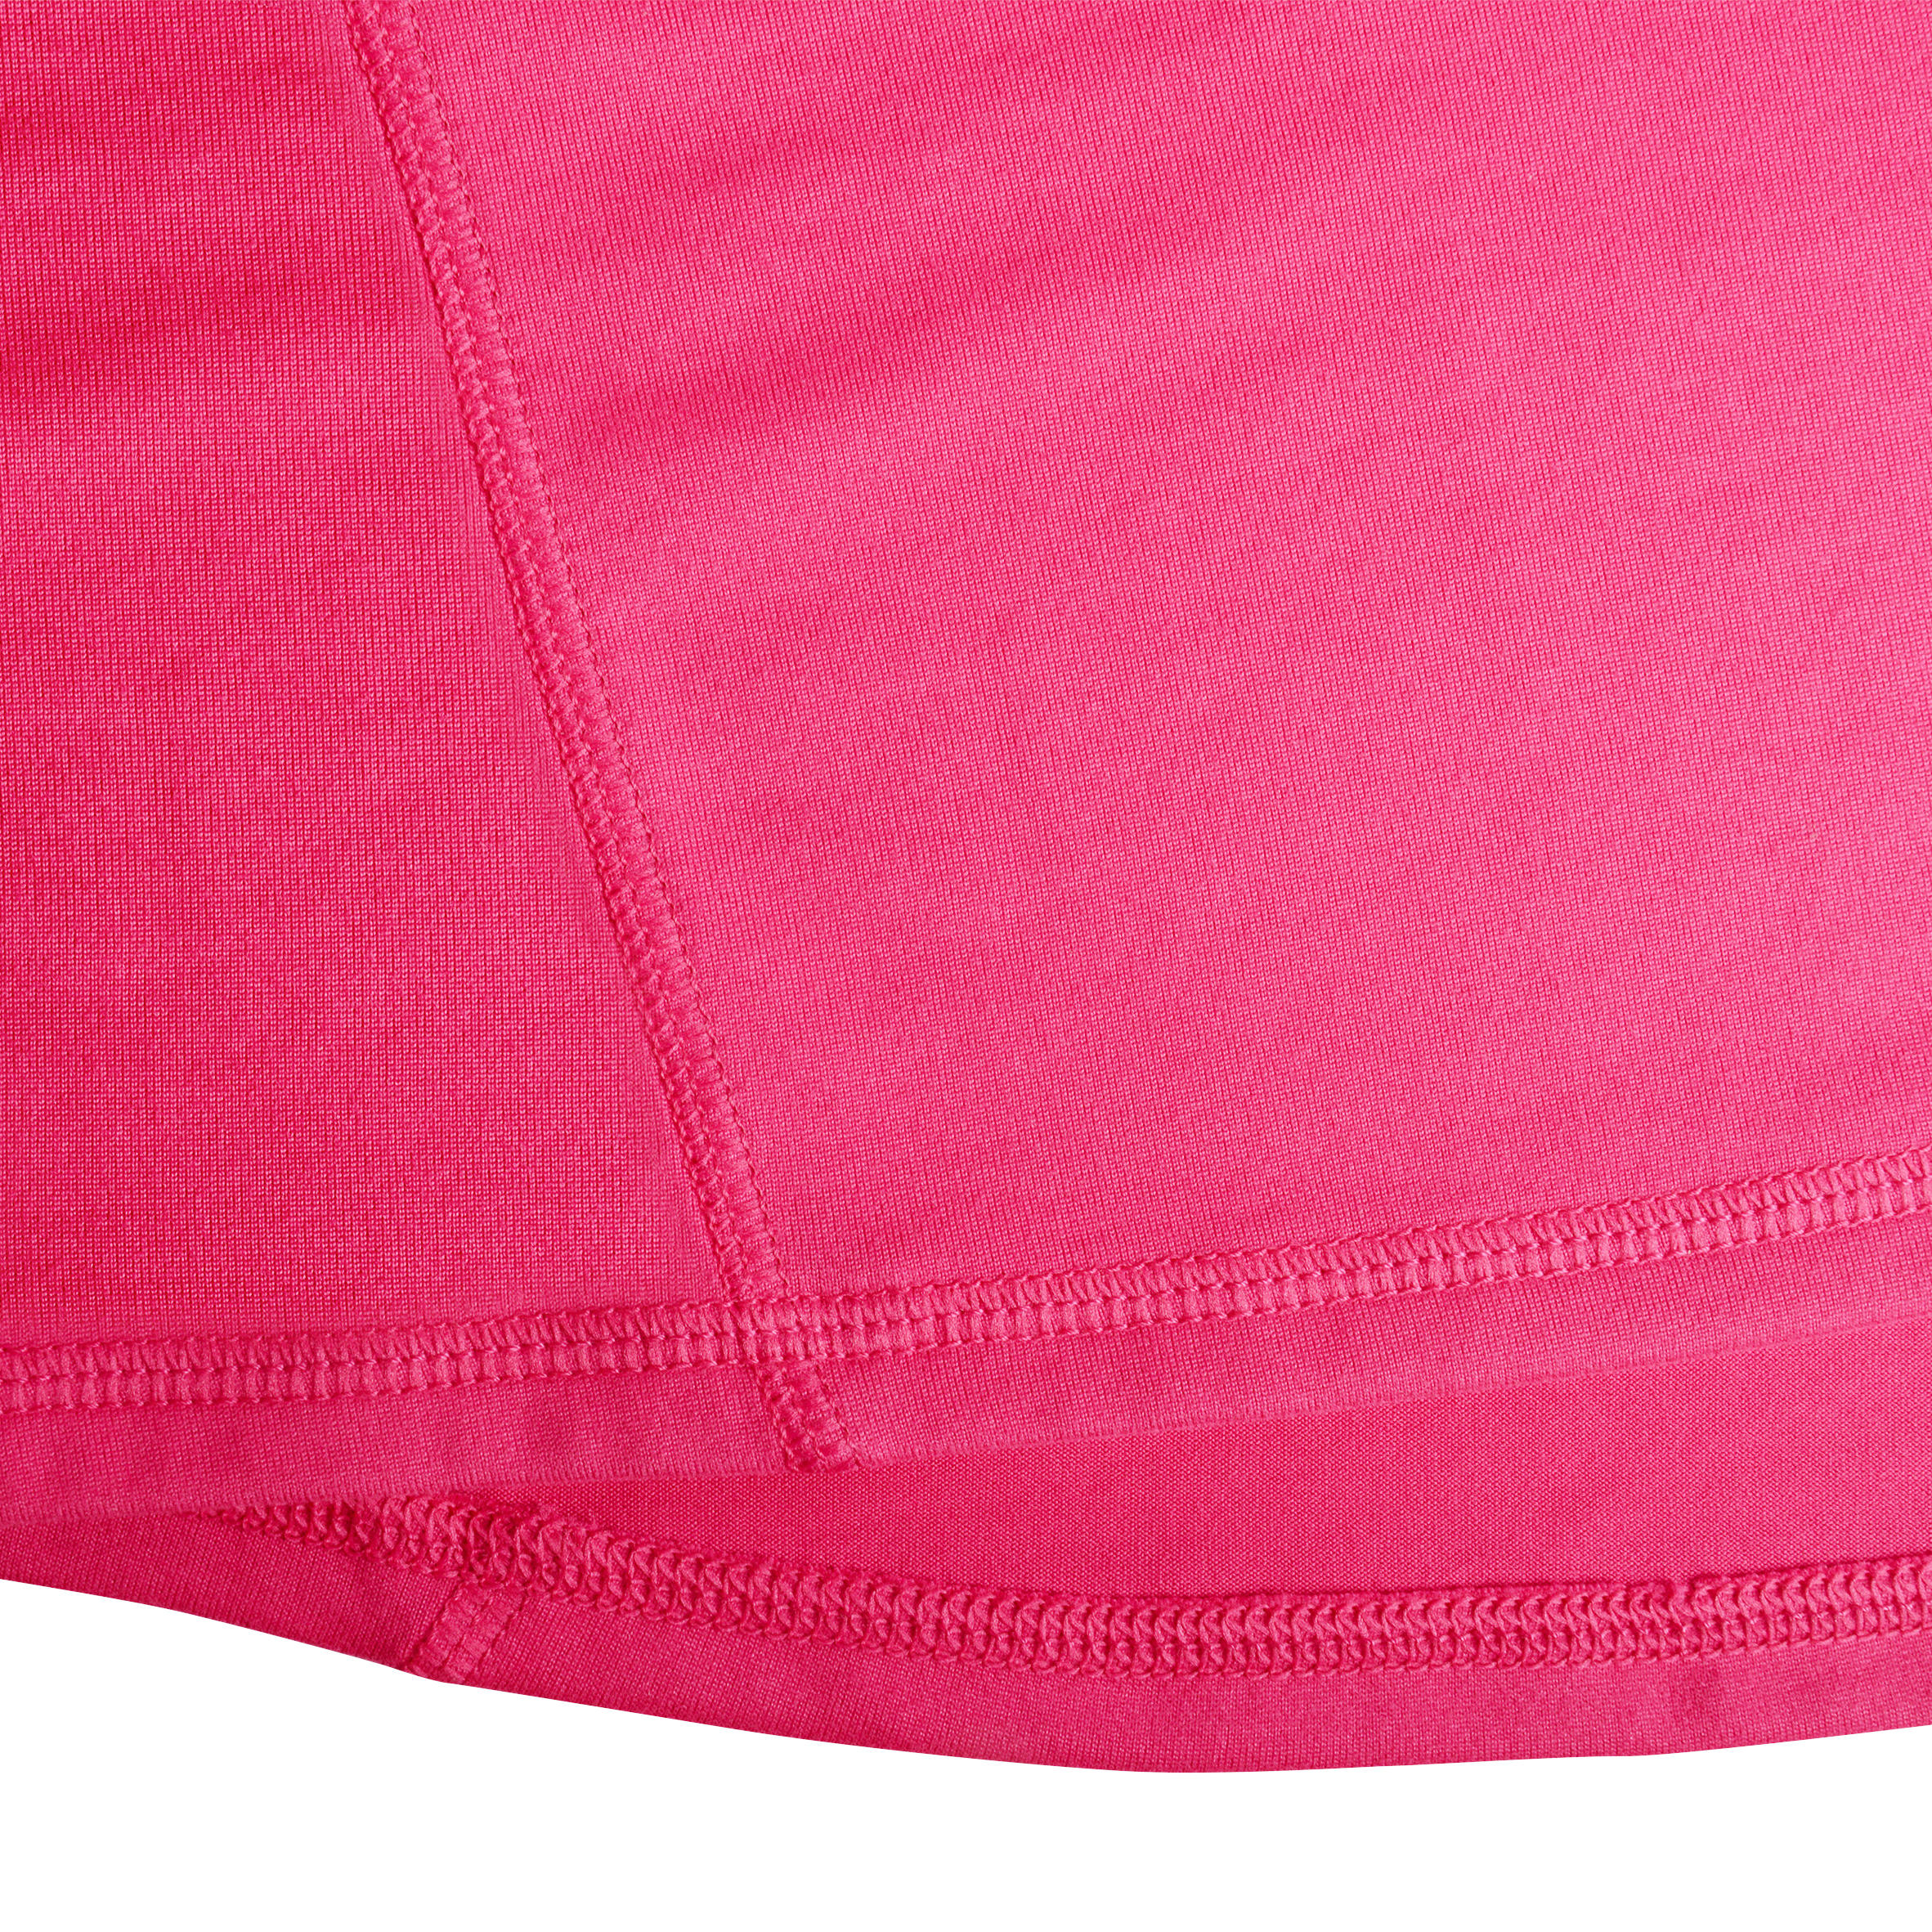 Hike 100 Girl’s Hiking T-Shirt – Pink 6/9